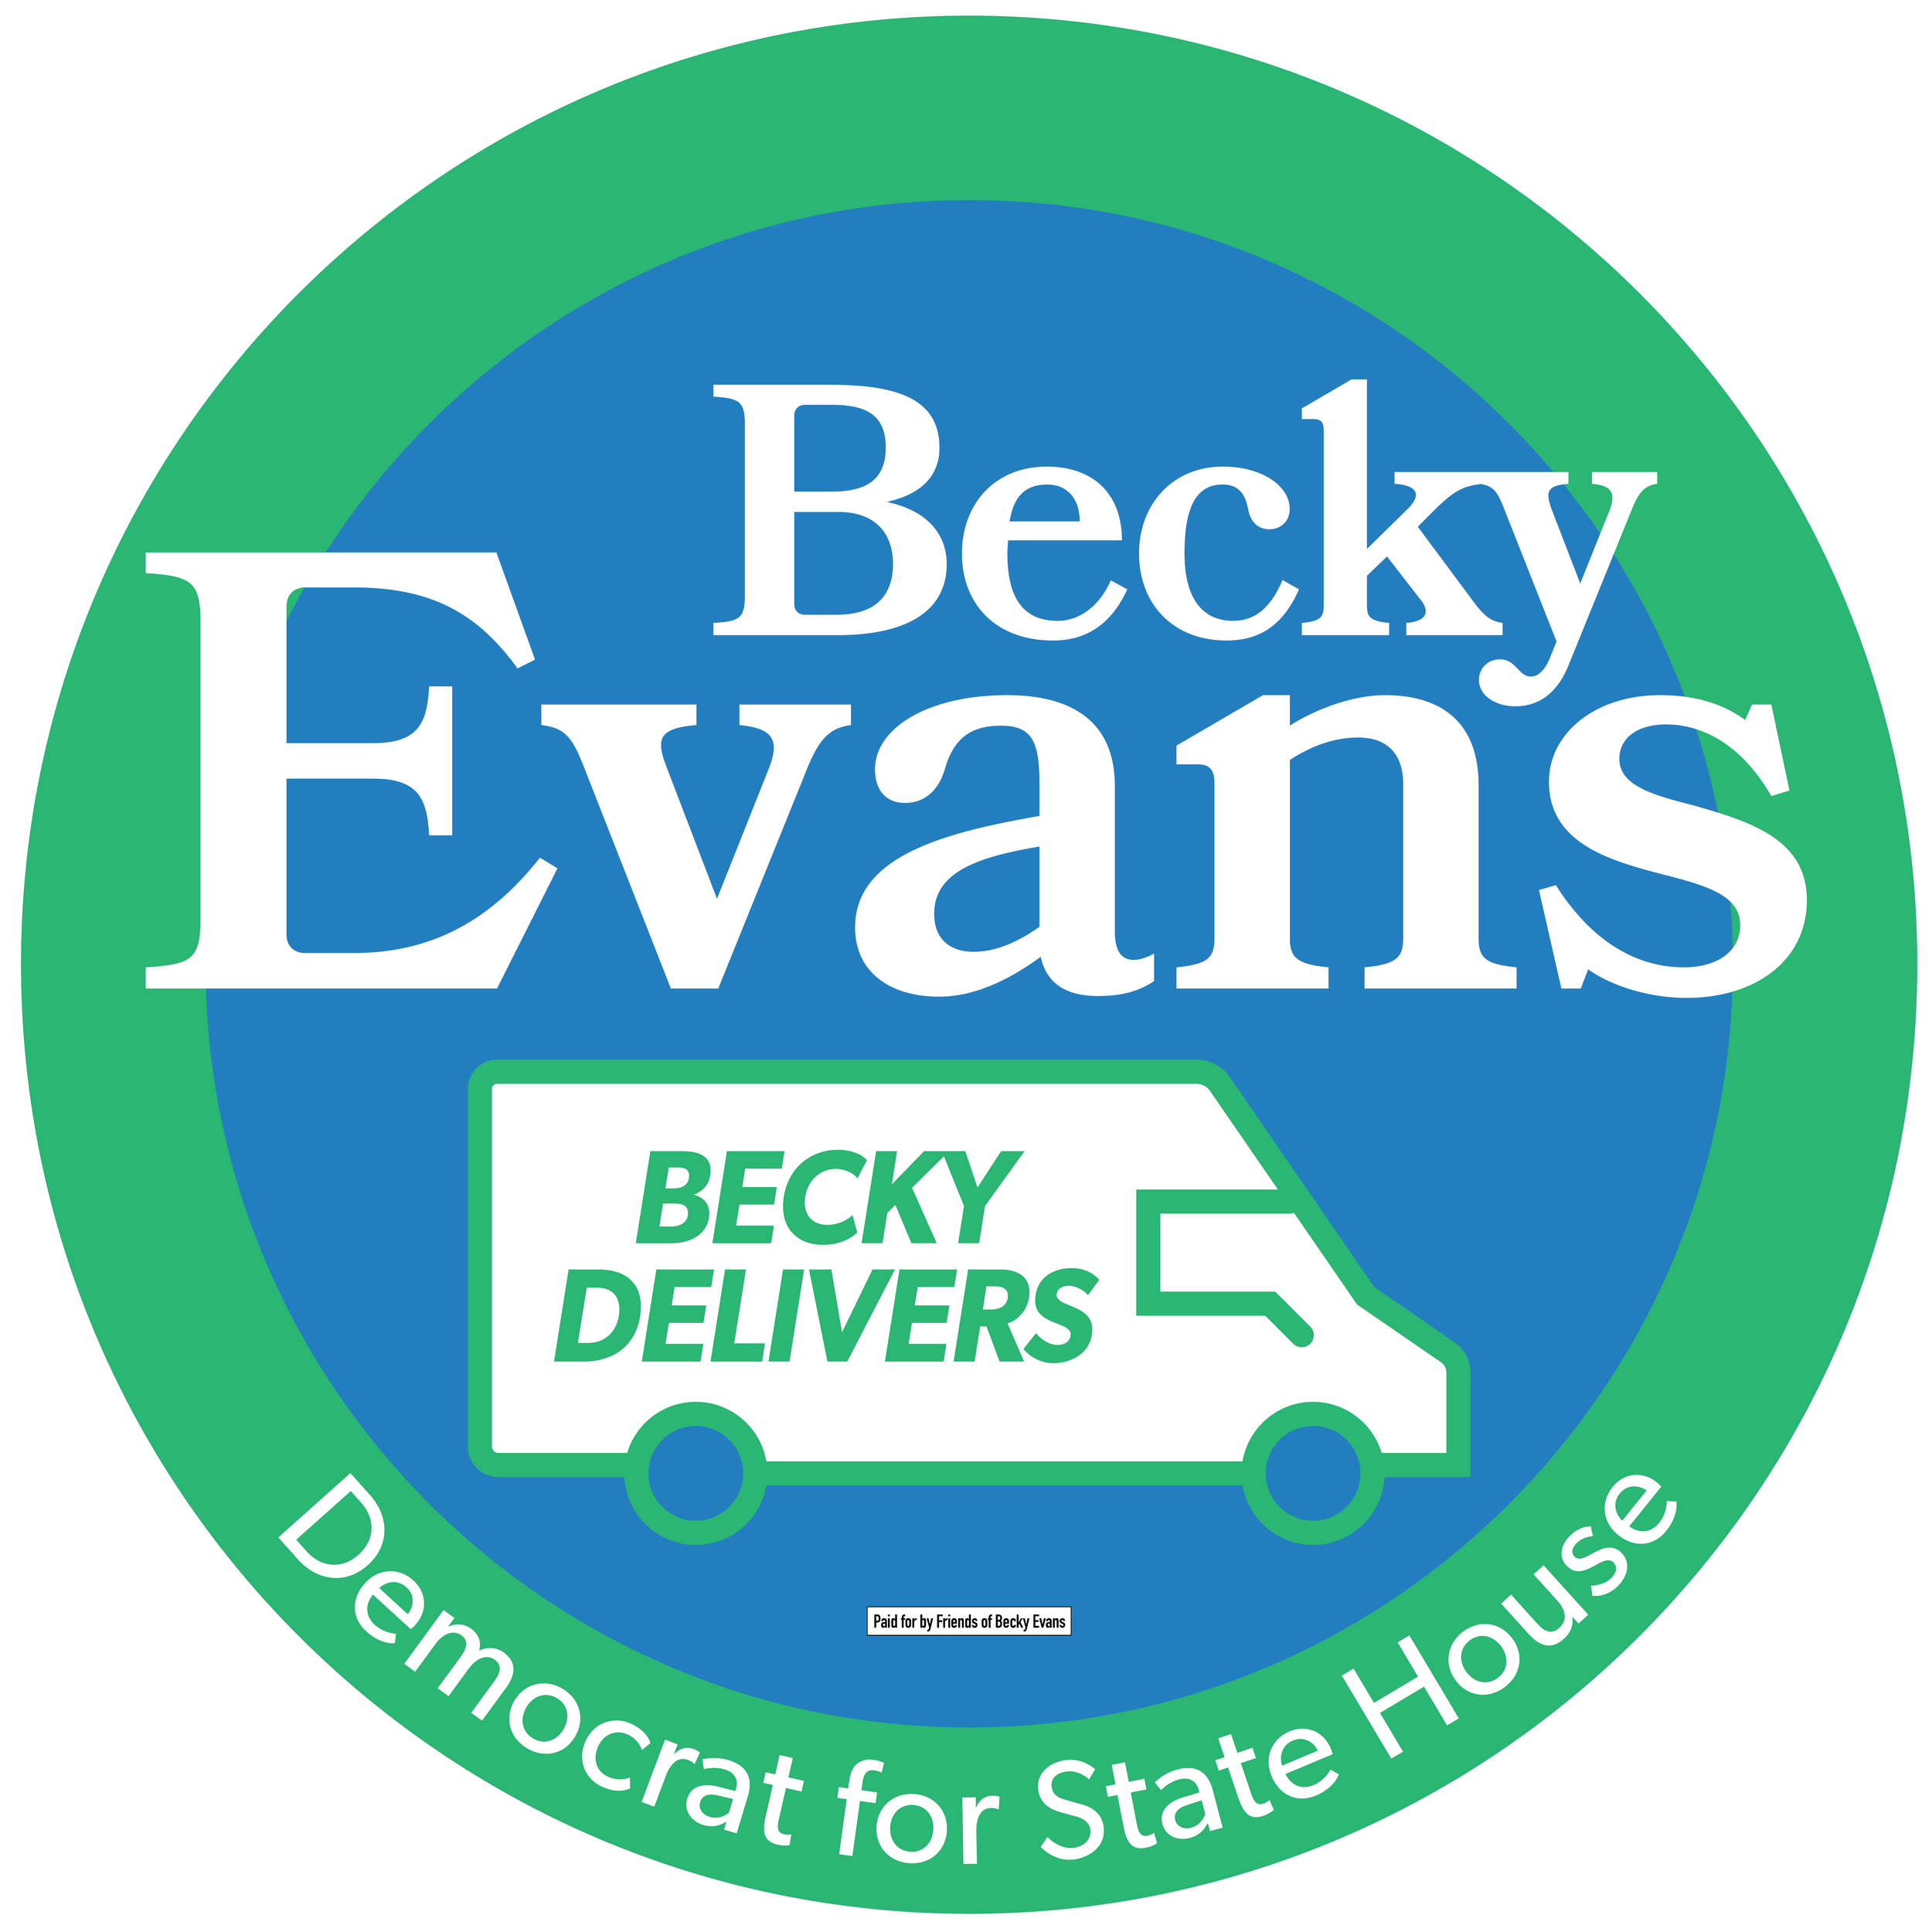 Rep. Becky Evans